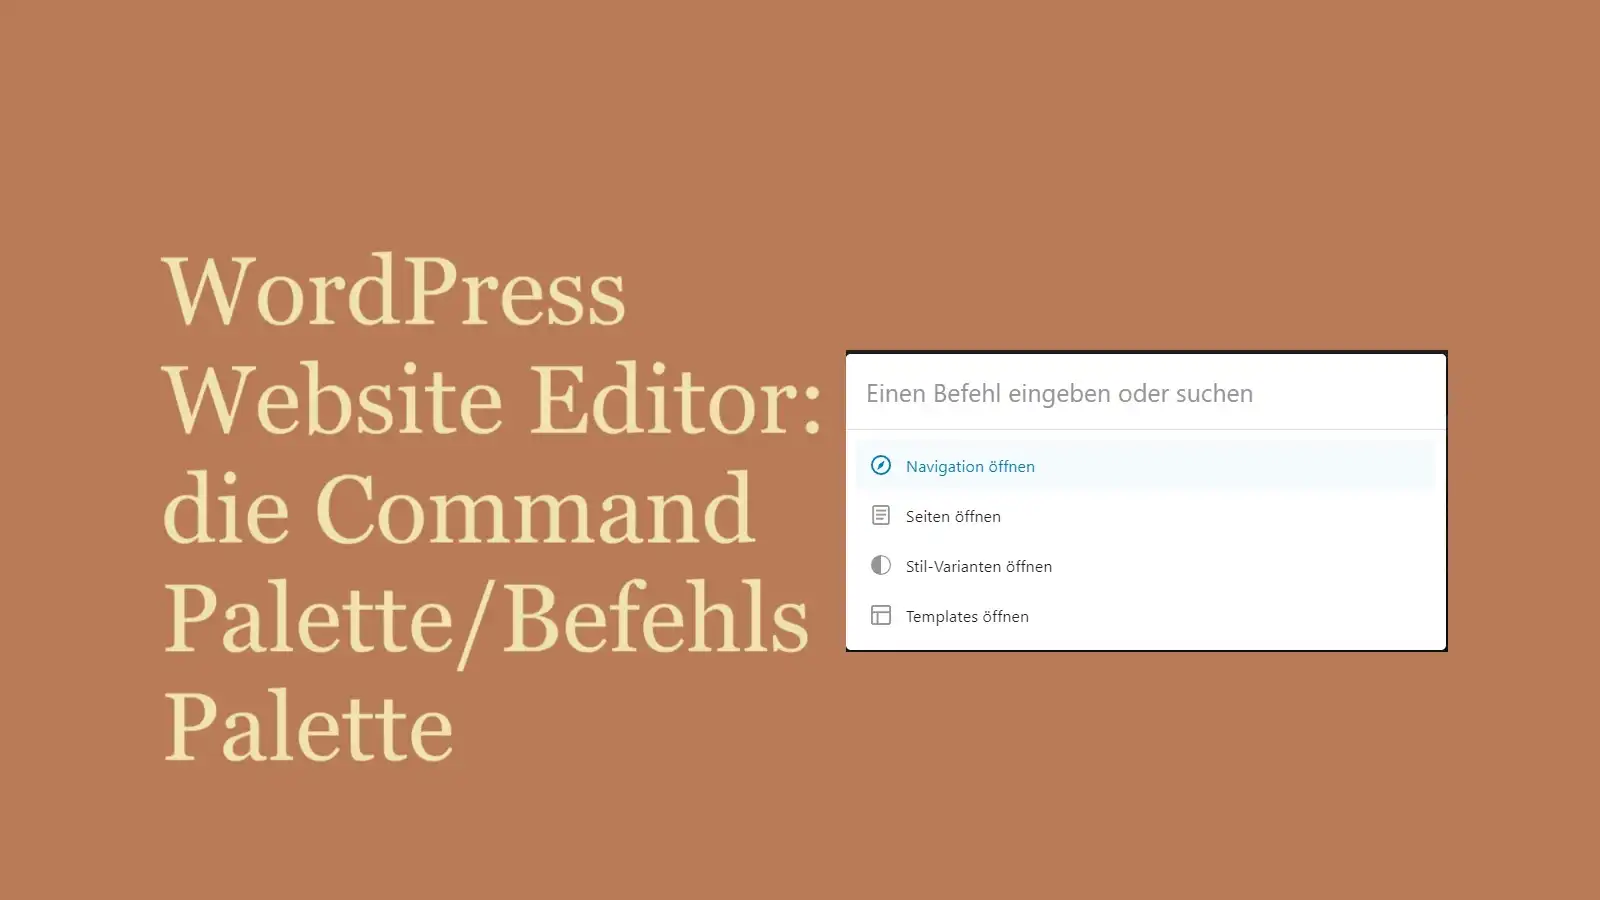 WordPress Website Editor: die Command Palette/Befehls Palette